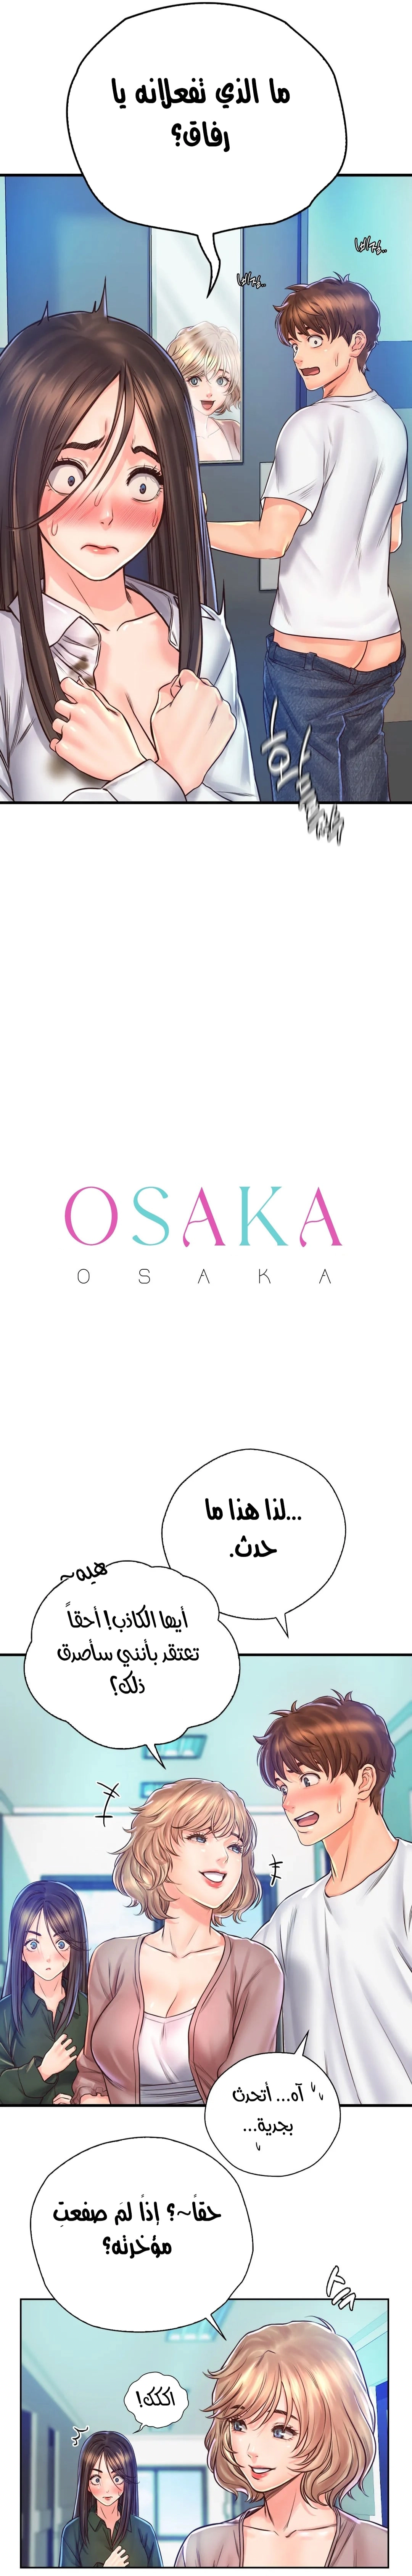 Osaka - 13 - 65598a44ceaa5.webp